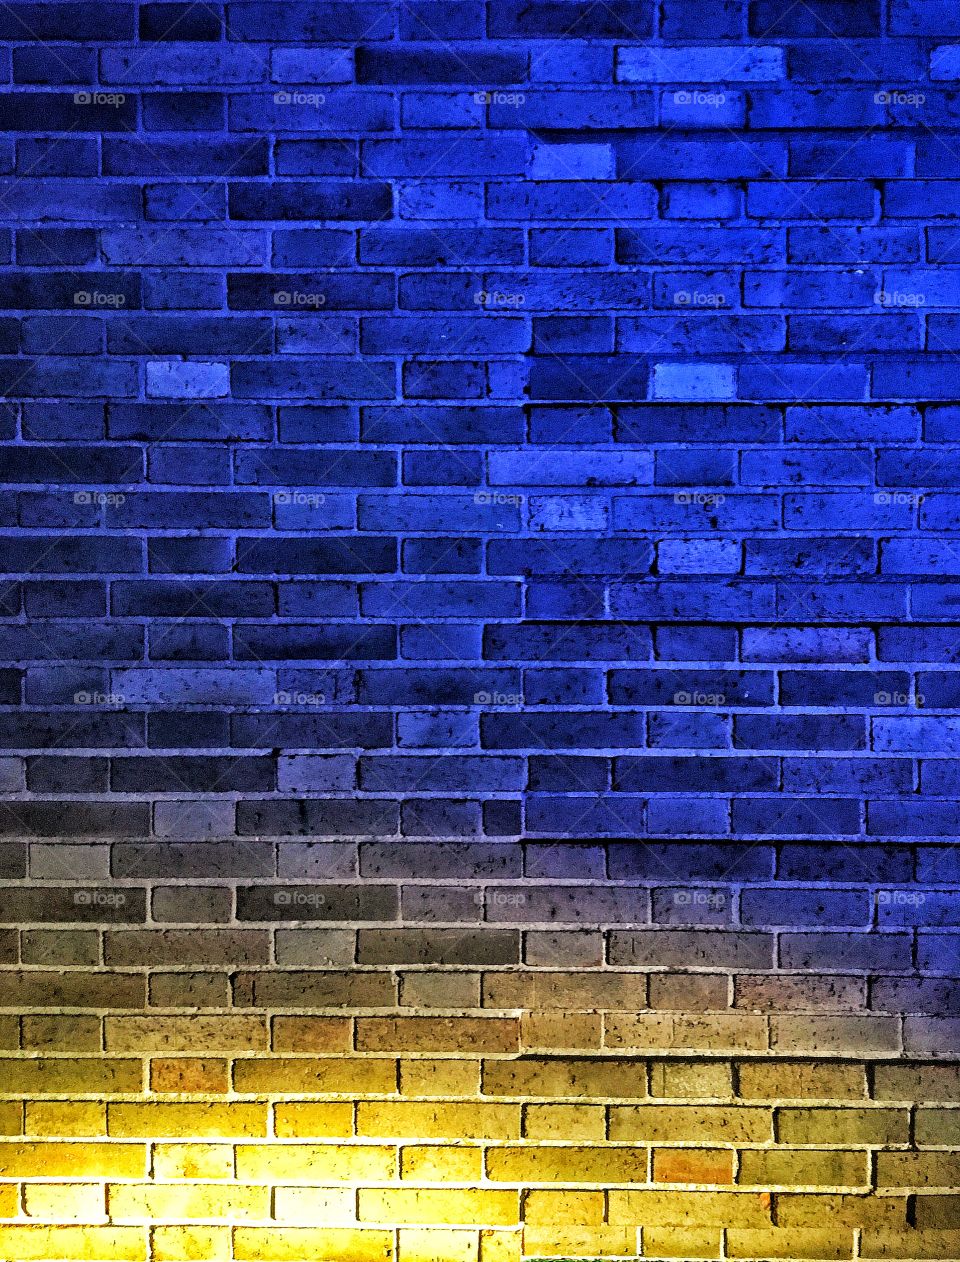 Street lights on a brick wall 